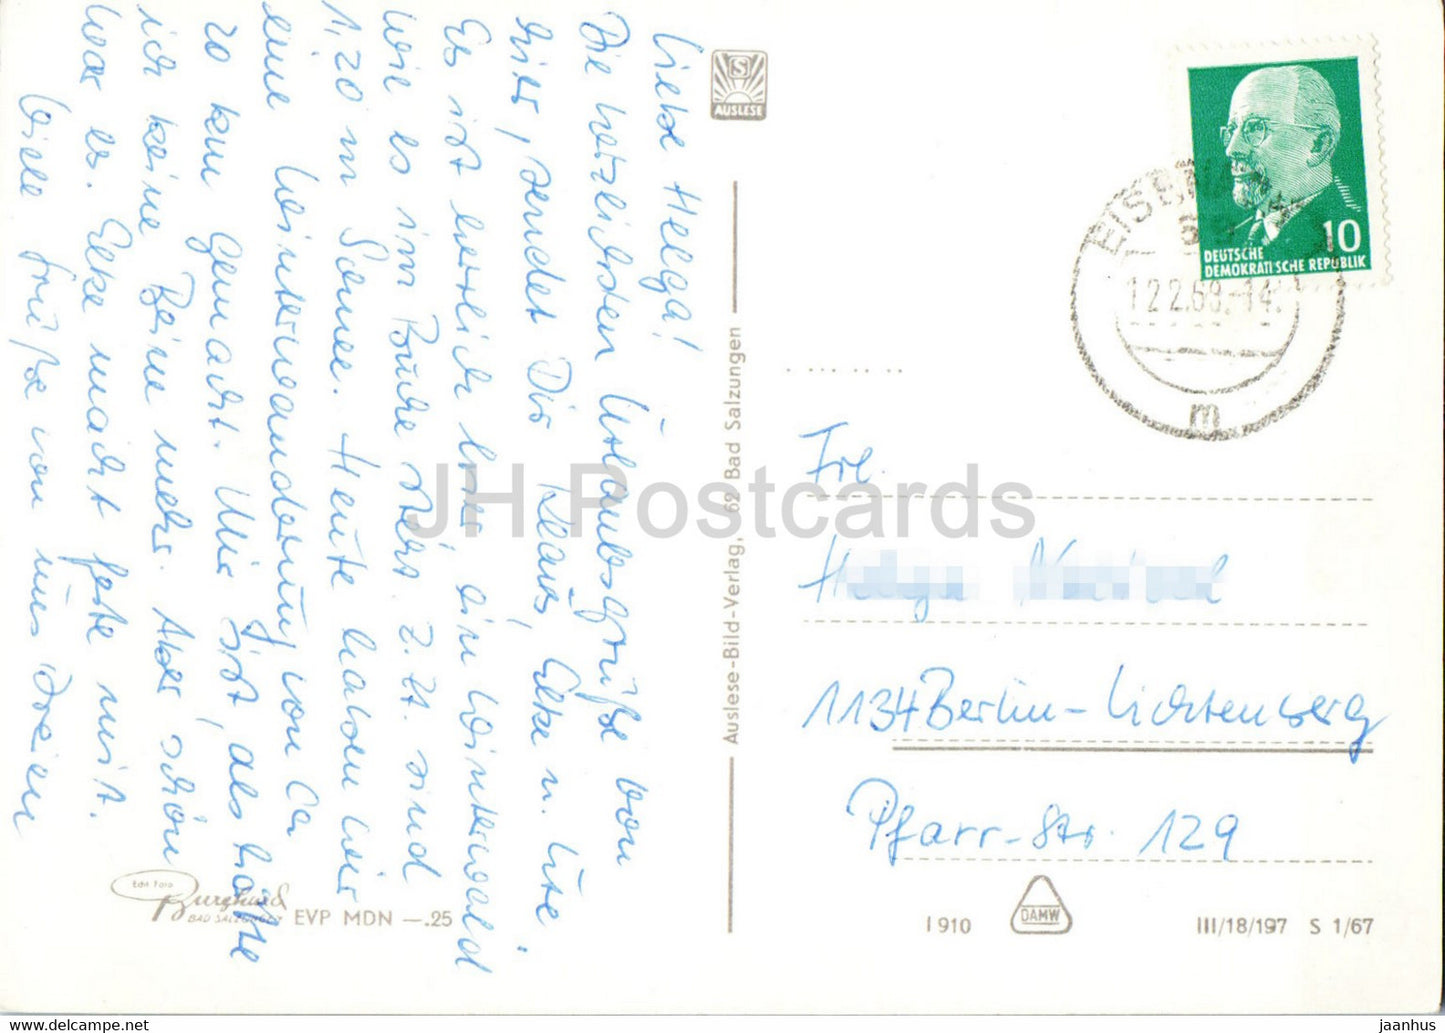 So schon ist auf dem Gr Inselsberg - carte postale ancienne - 1968 - Allemagne DDR - utilisé